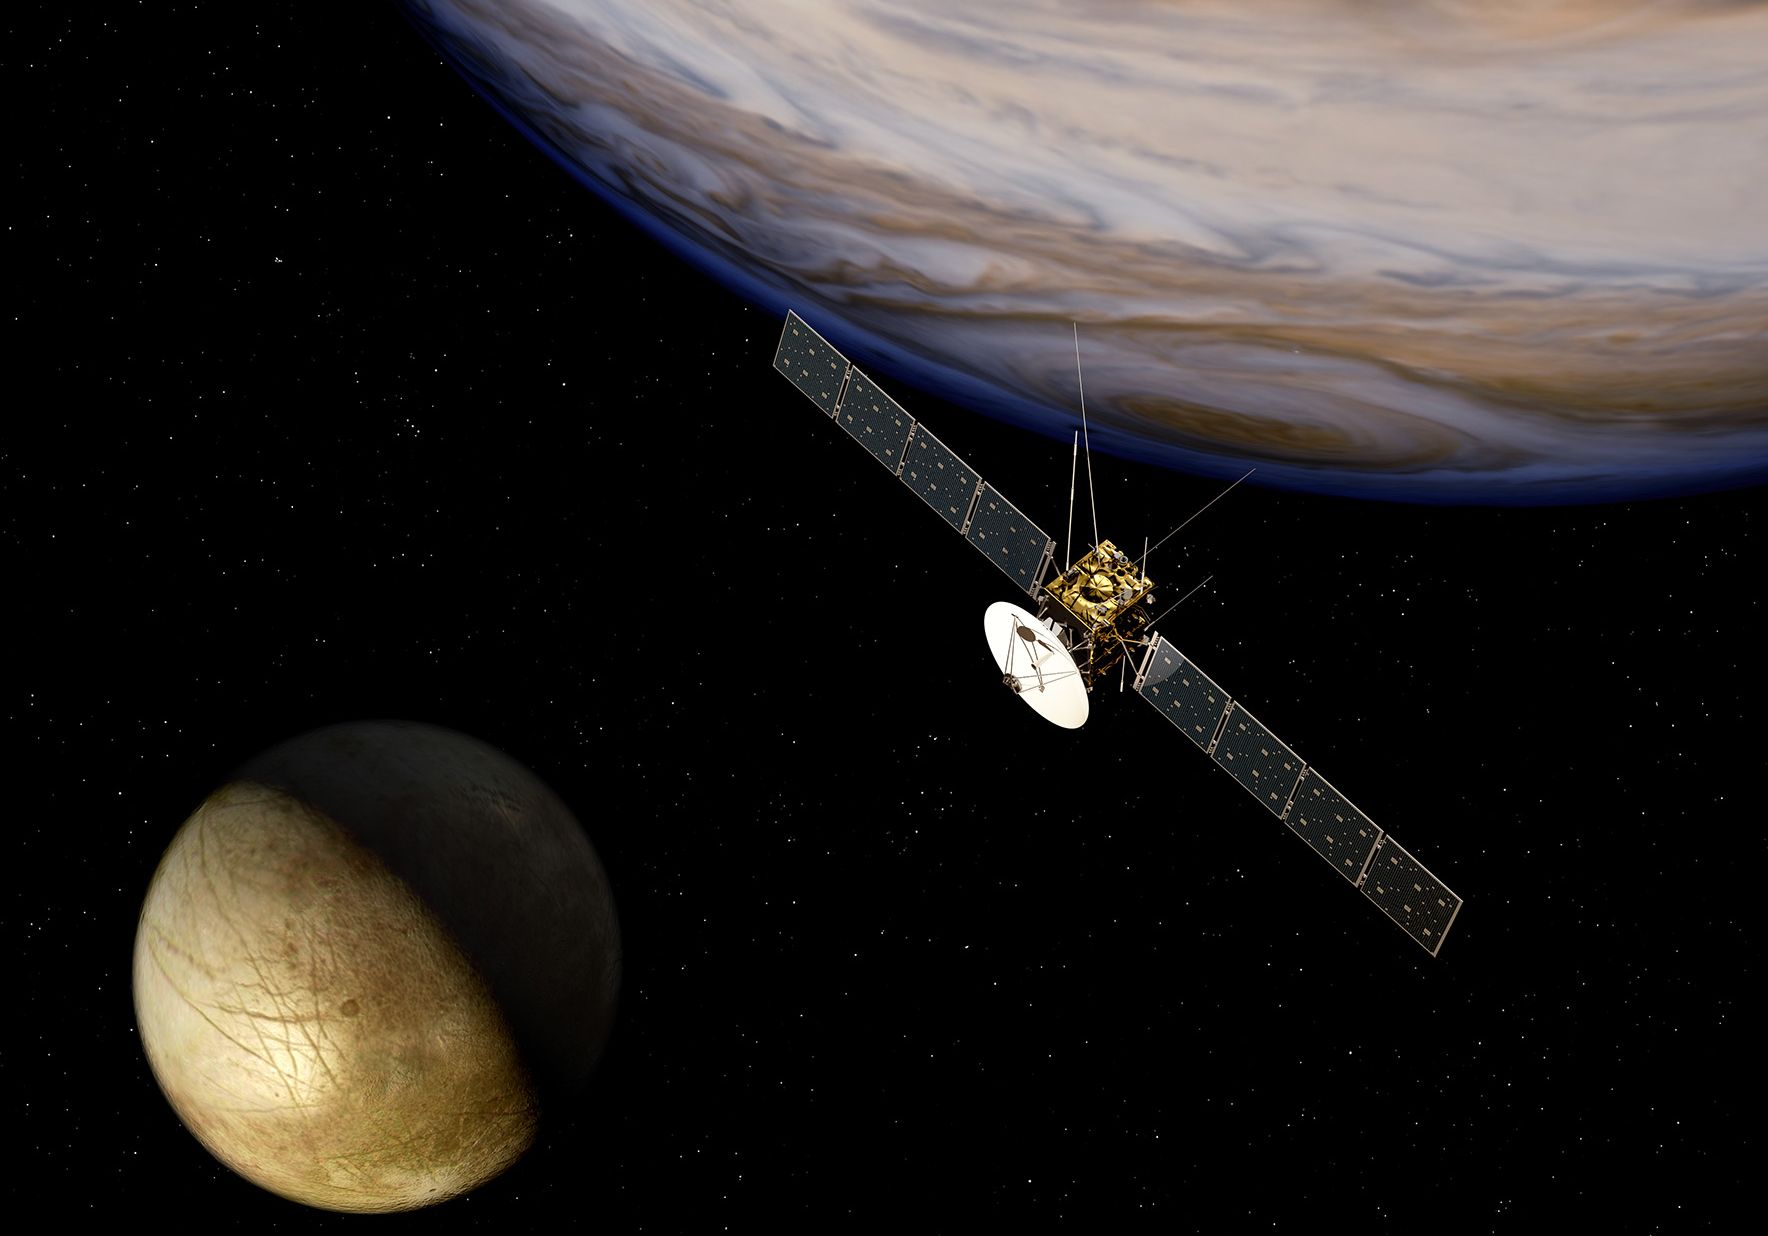 Artist's impression of the JUICE mission. Image Credit: ESA/AOES